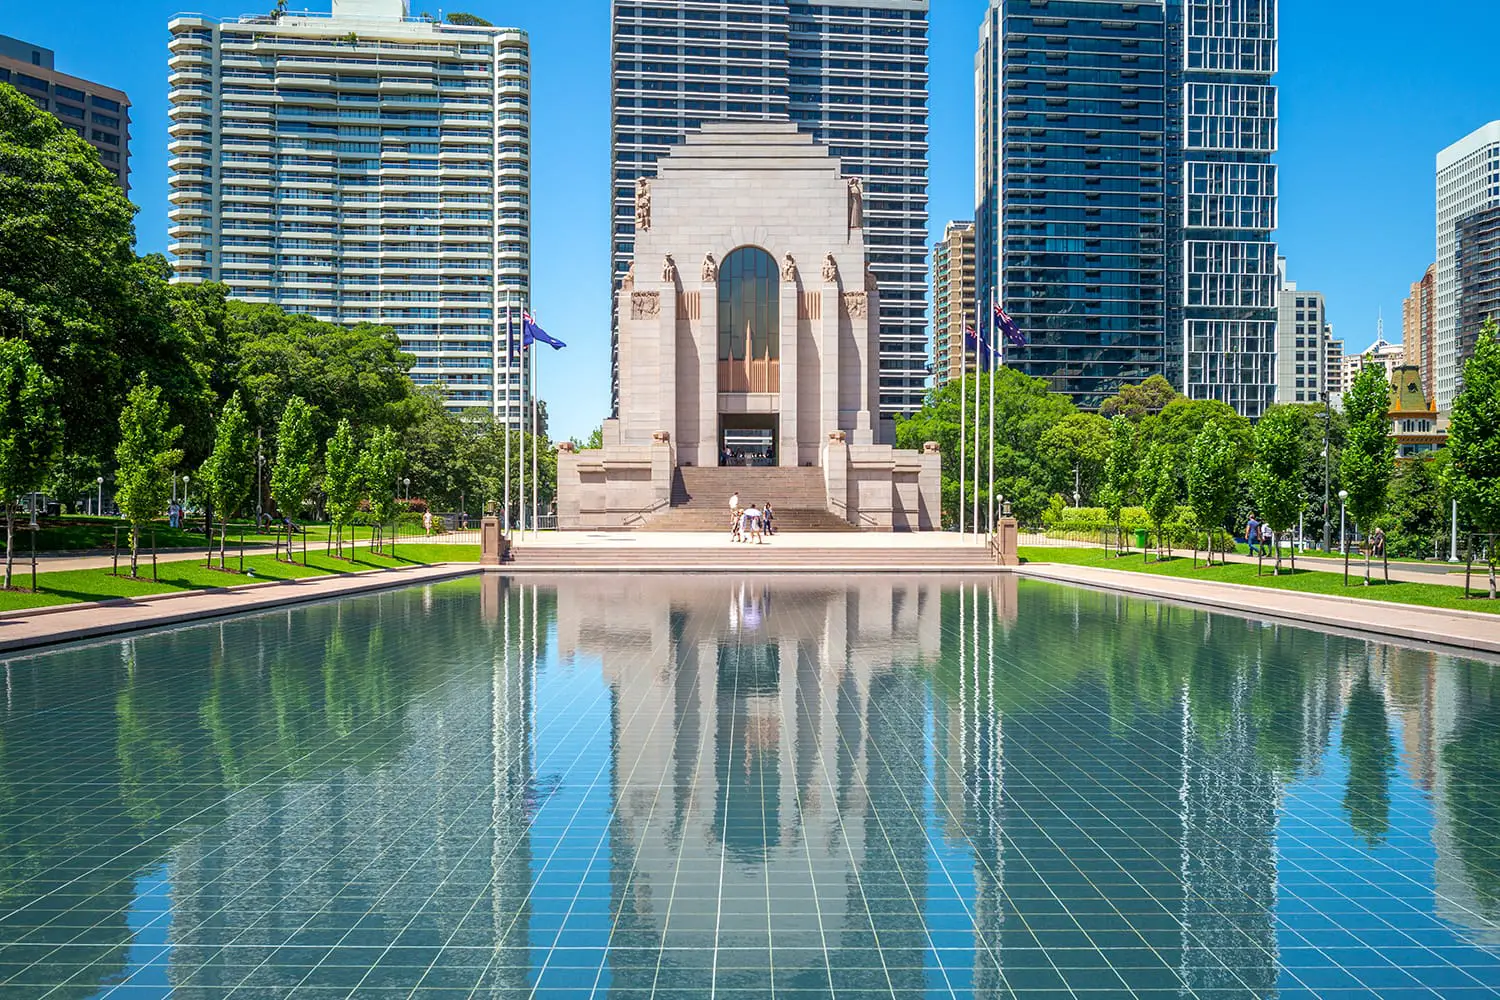 ANZAC War Memorial in Sydney, Australia